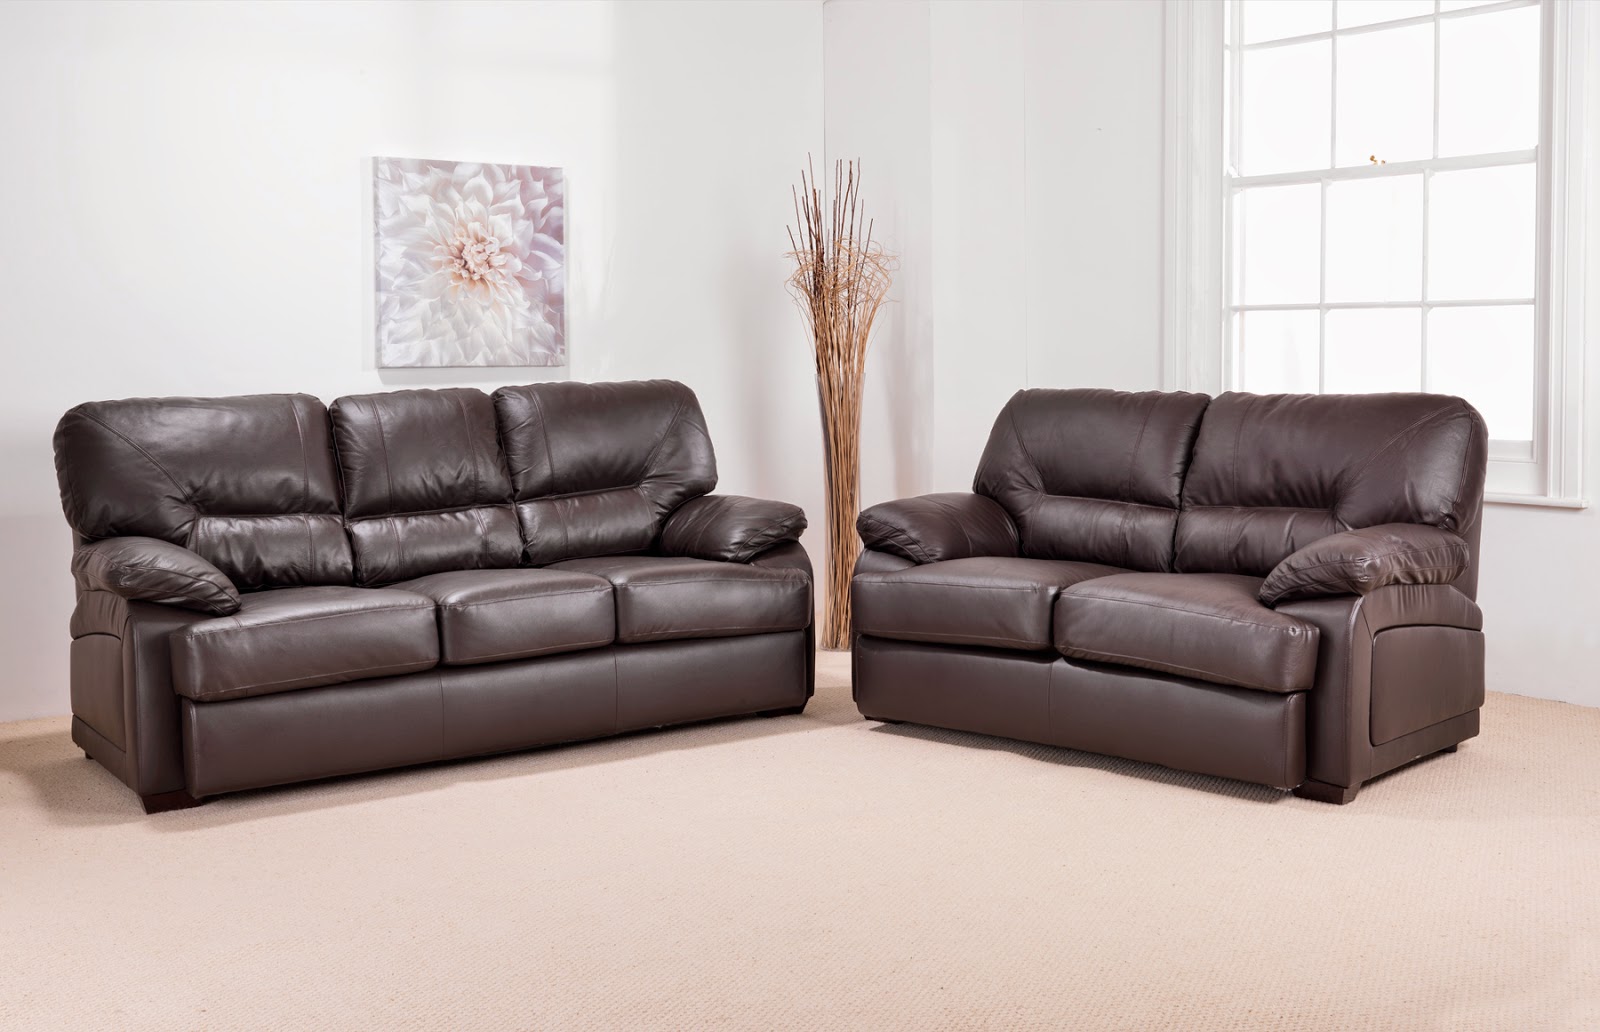 Elegant leather sofas